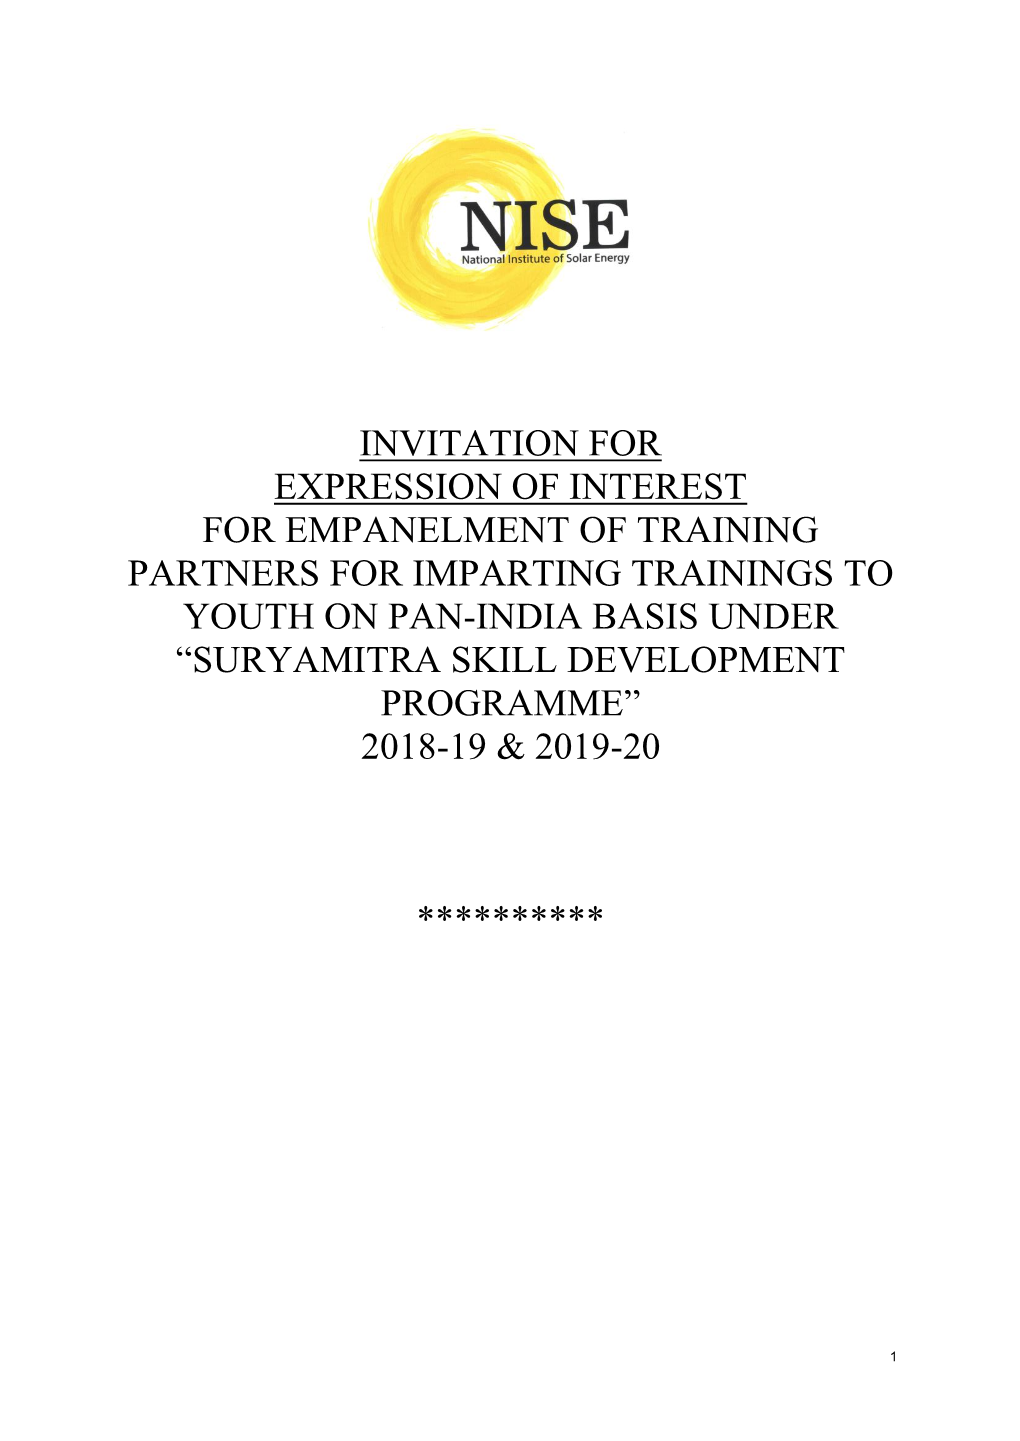 Invitation for Expression of Interest for Empanelment of Training Partners